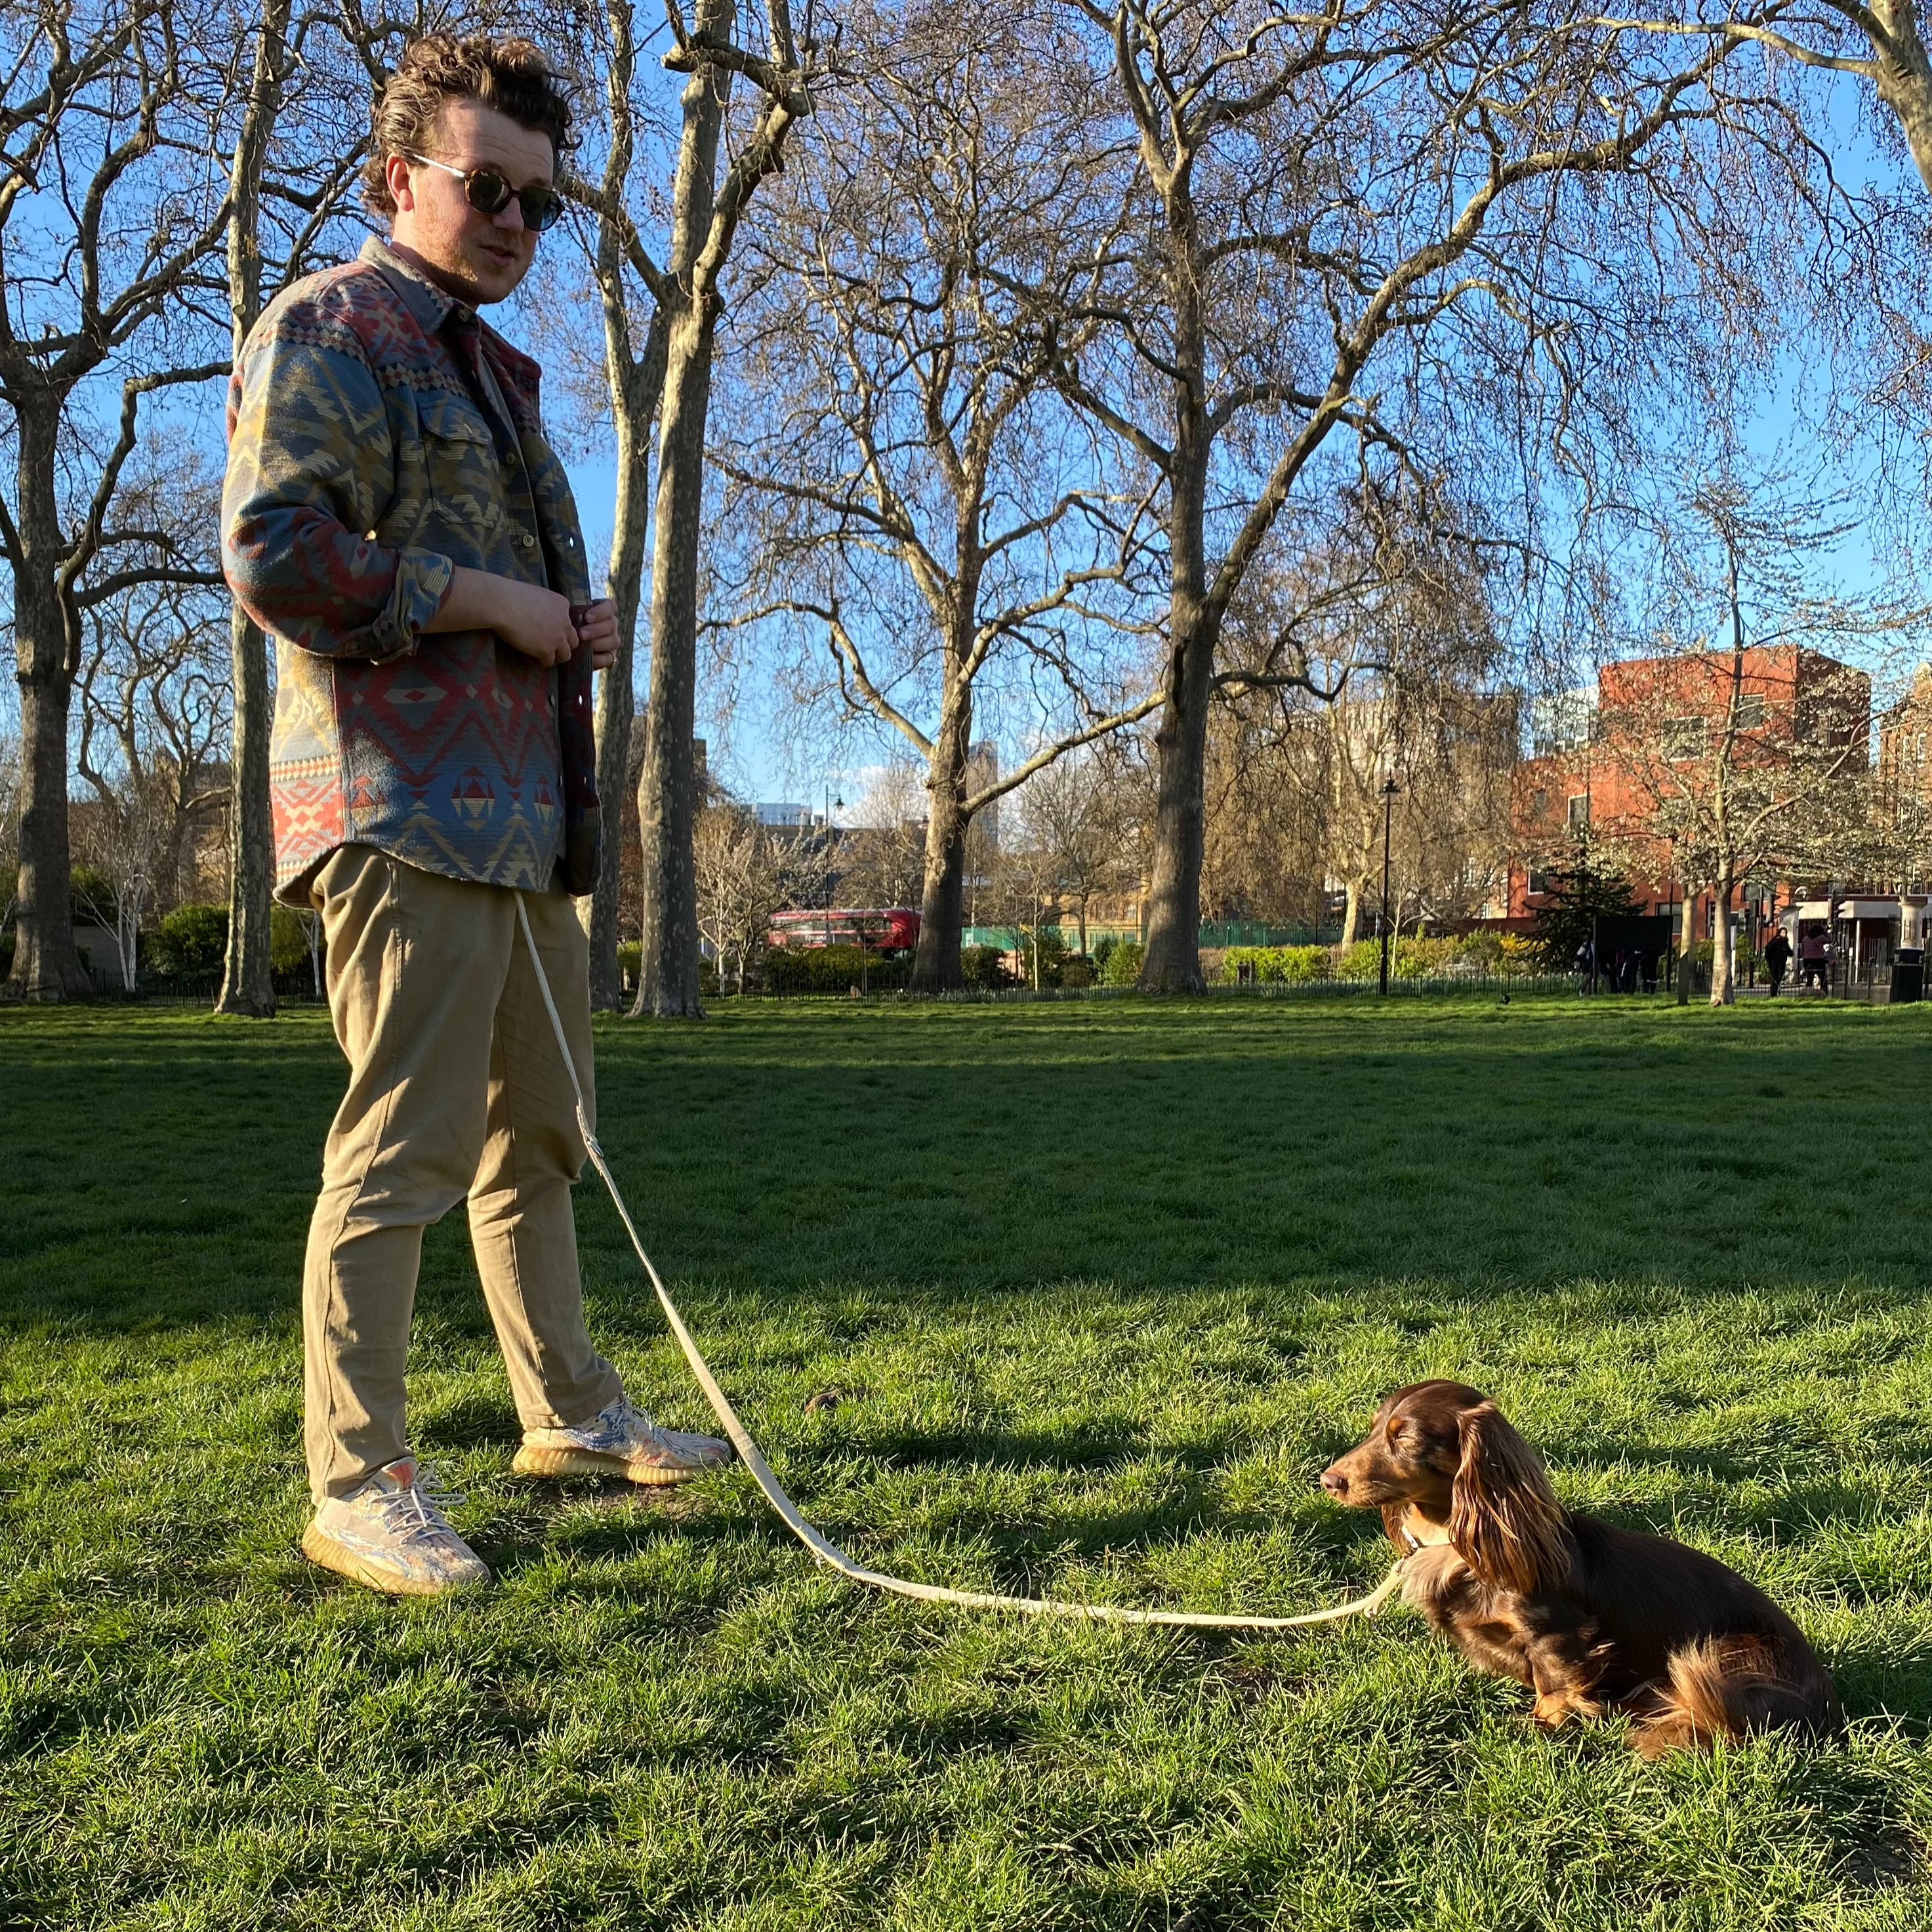 Hands Free option dog leash in Natural Hemp, for dog training